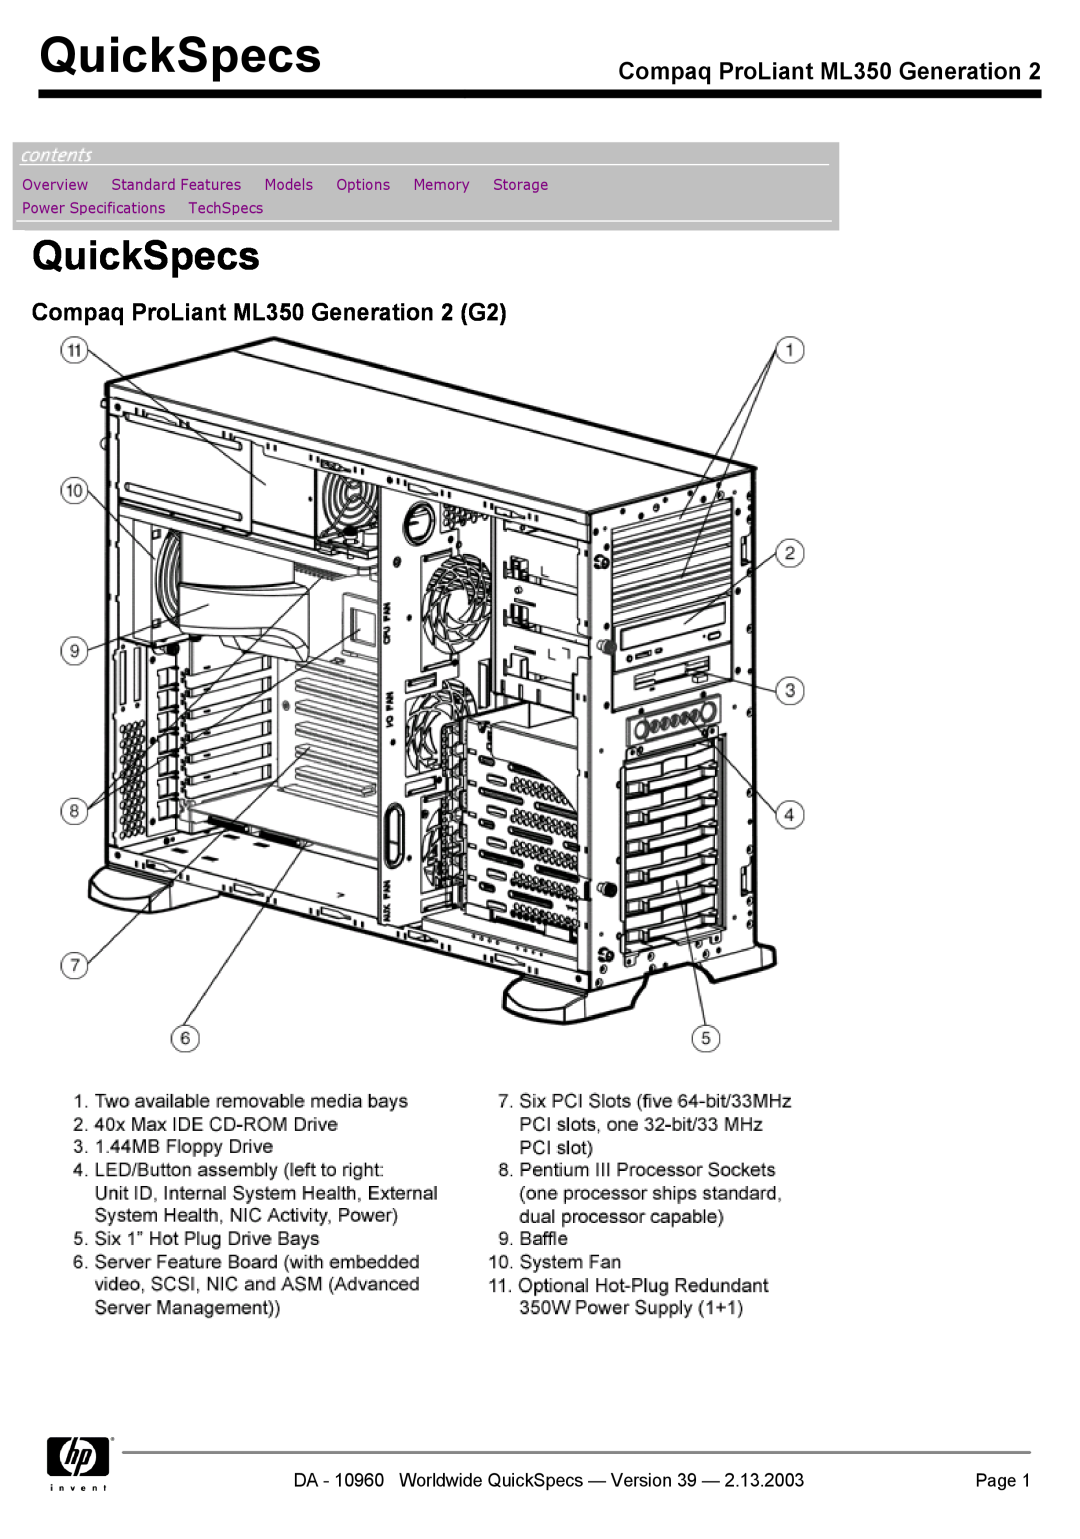 Compaq specifications QuickSpecs, Compaq ProLiant ML350 Generation 2 G2, Page, Power Specifications TechSpecs 